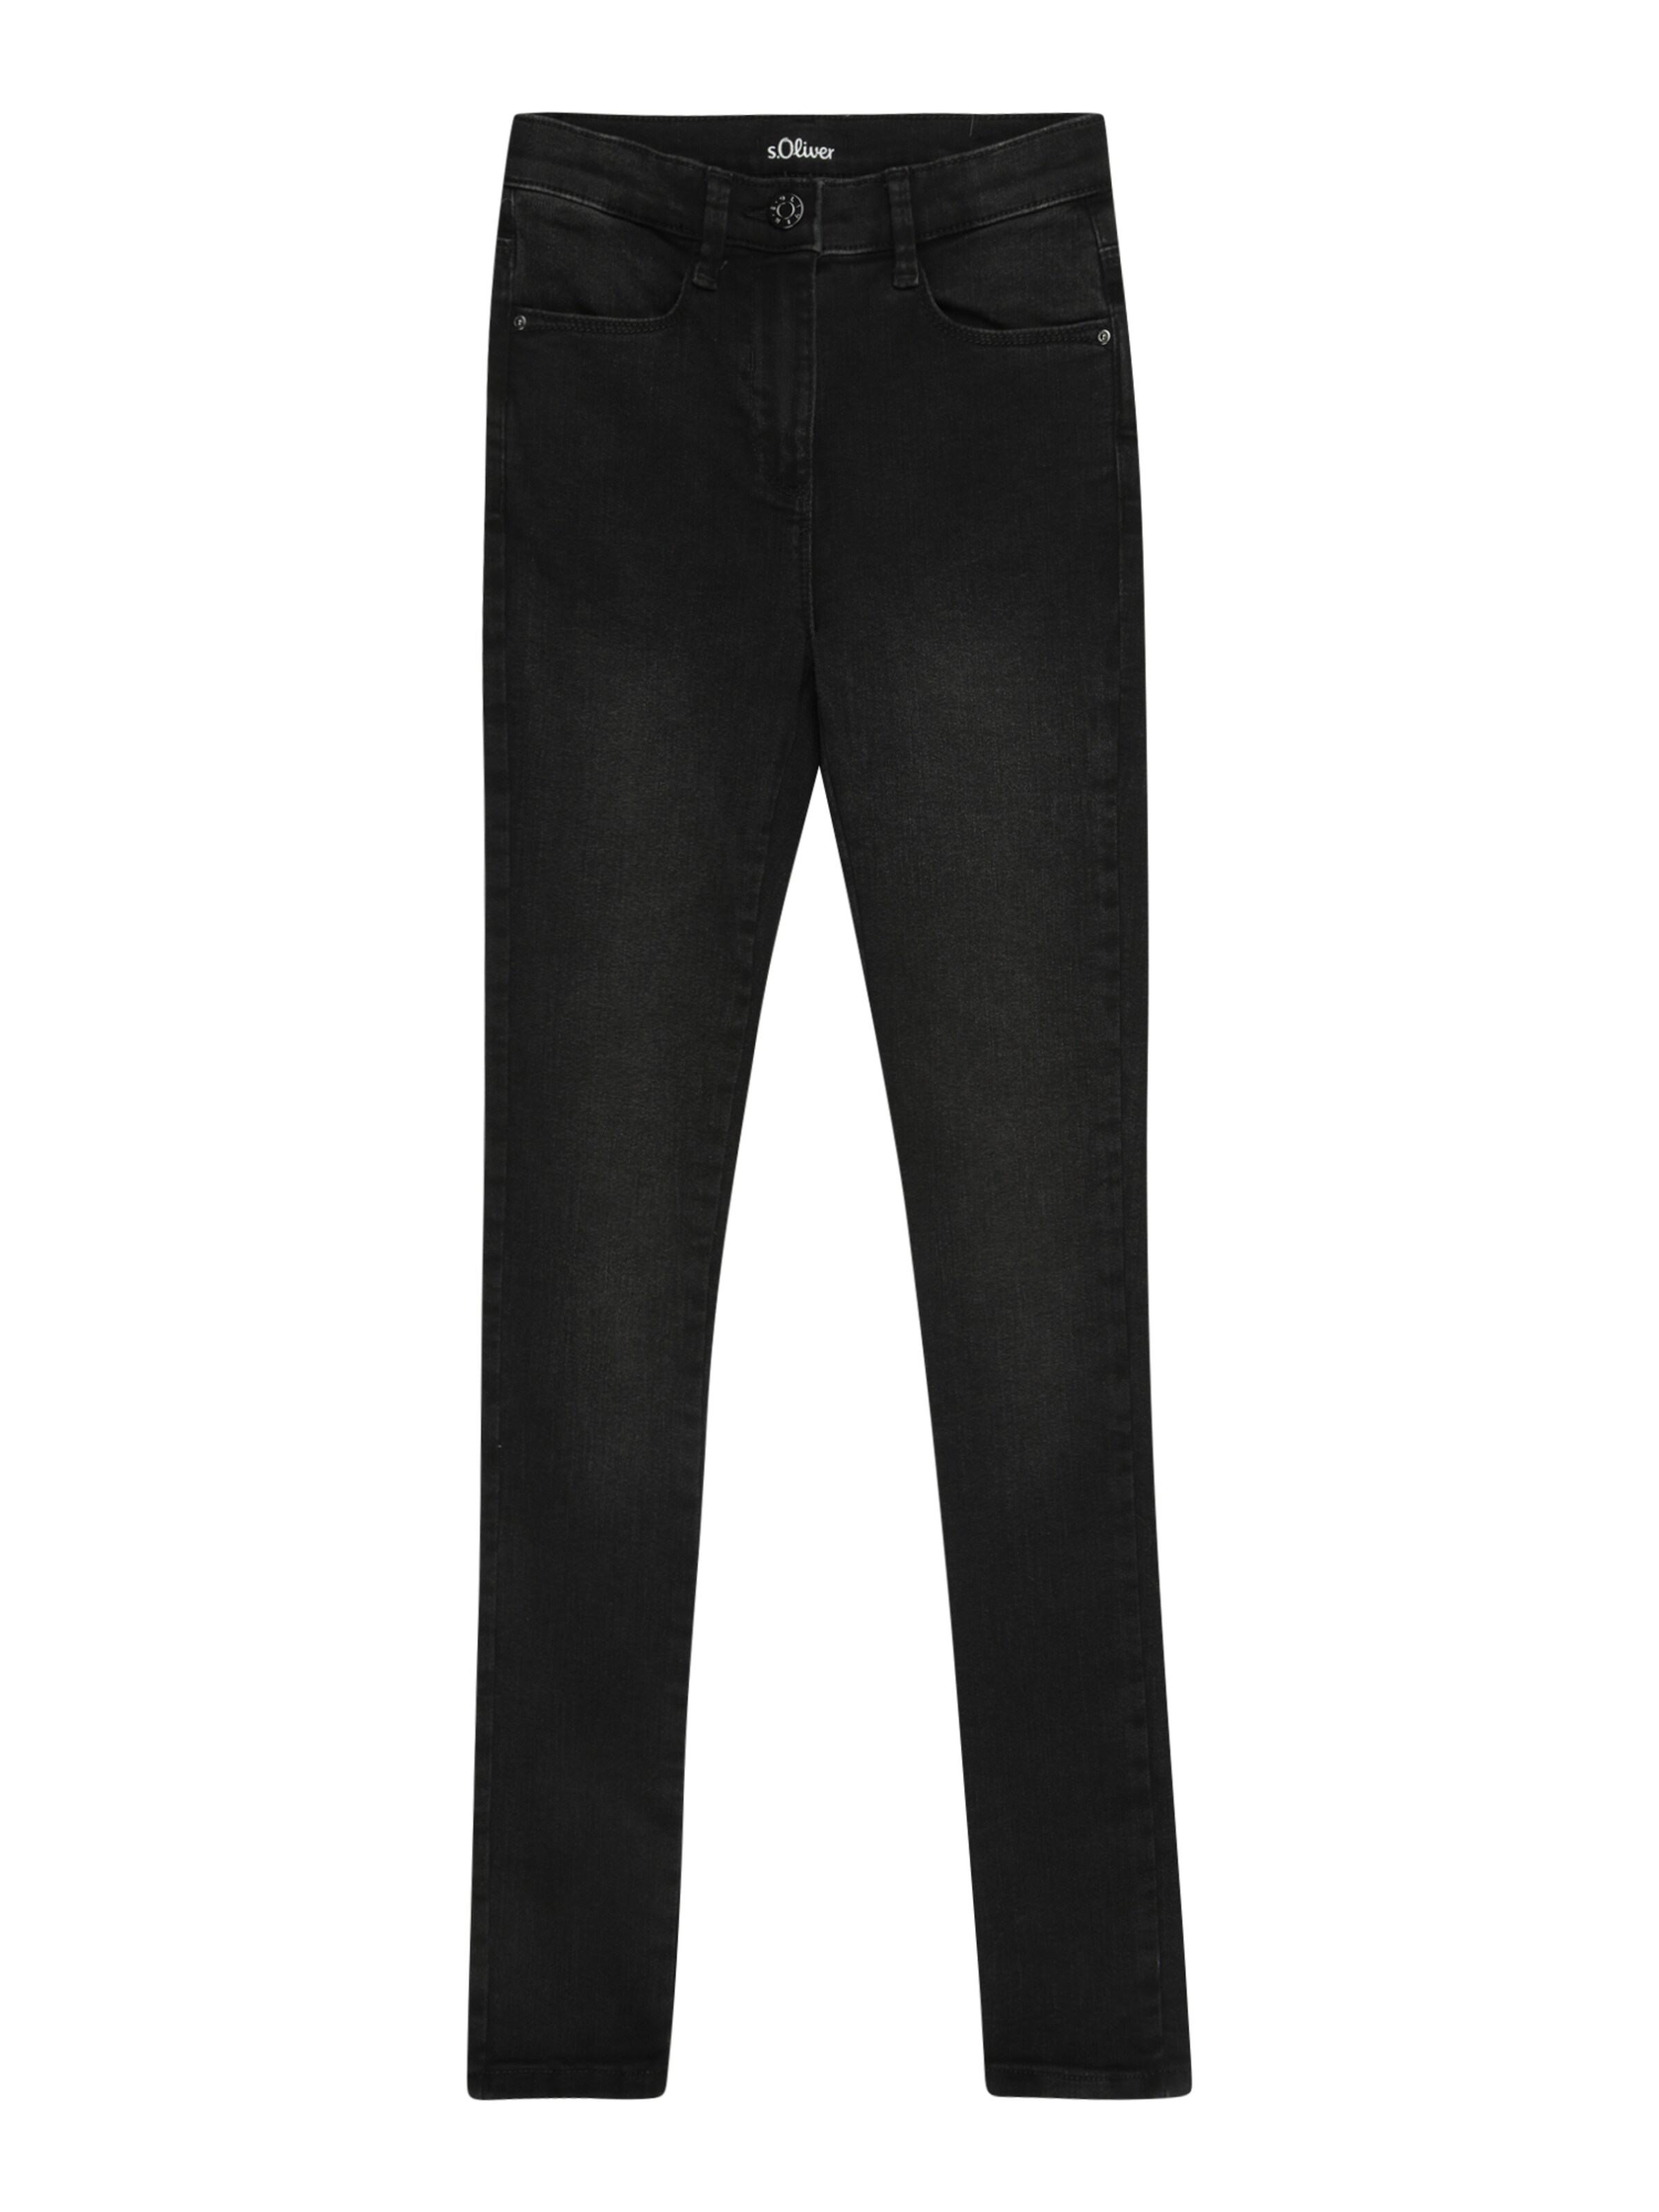 Skinny Fit Jeans mit Stretchmaterial De Bijenkorf Mädchen Kleidung Hosen & Jeans Jeans Skinny Jeans 